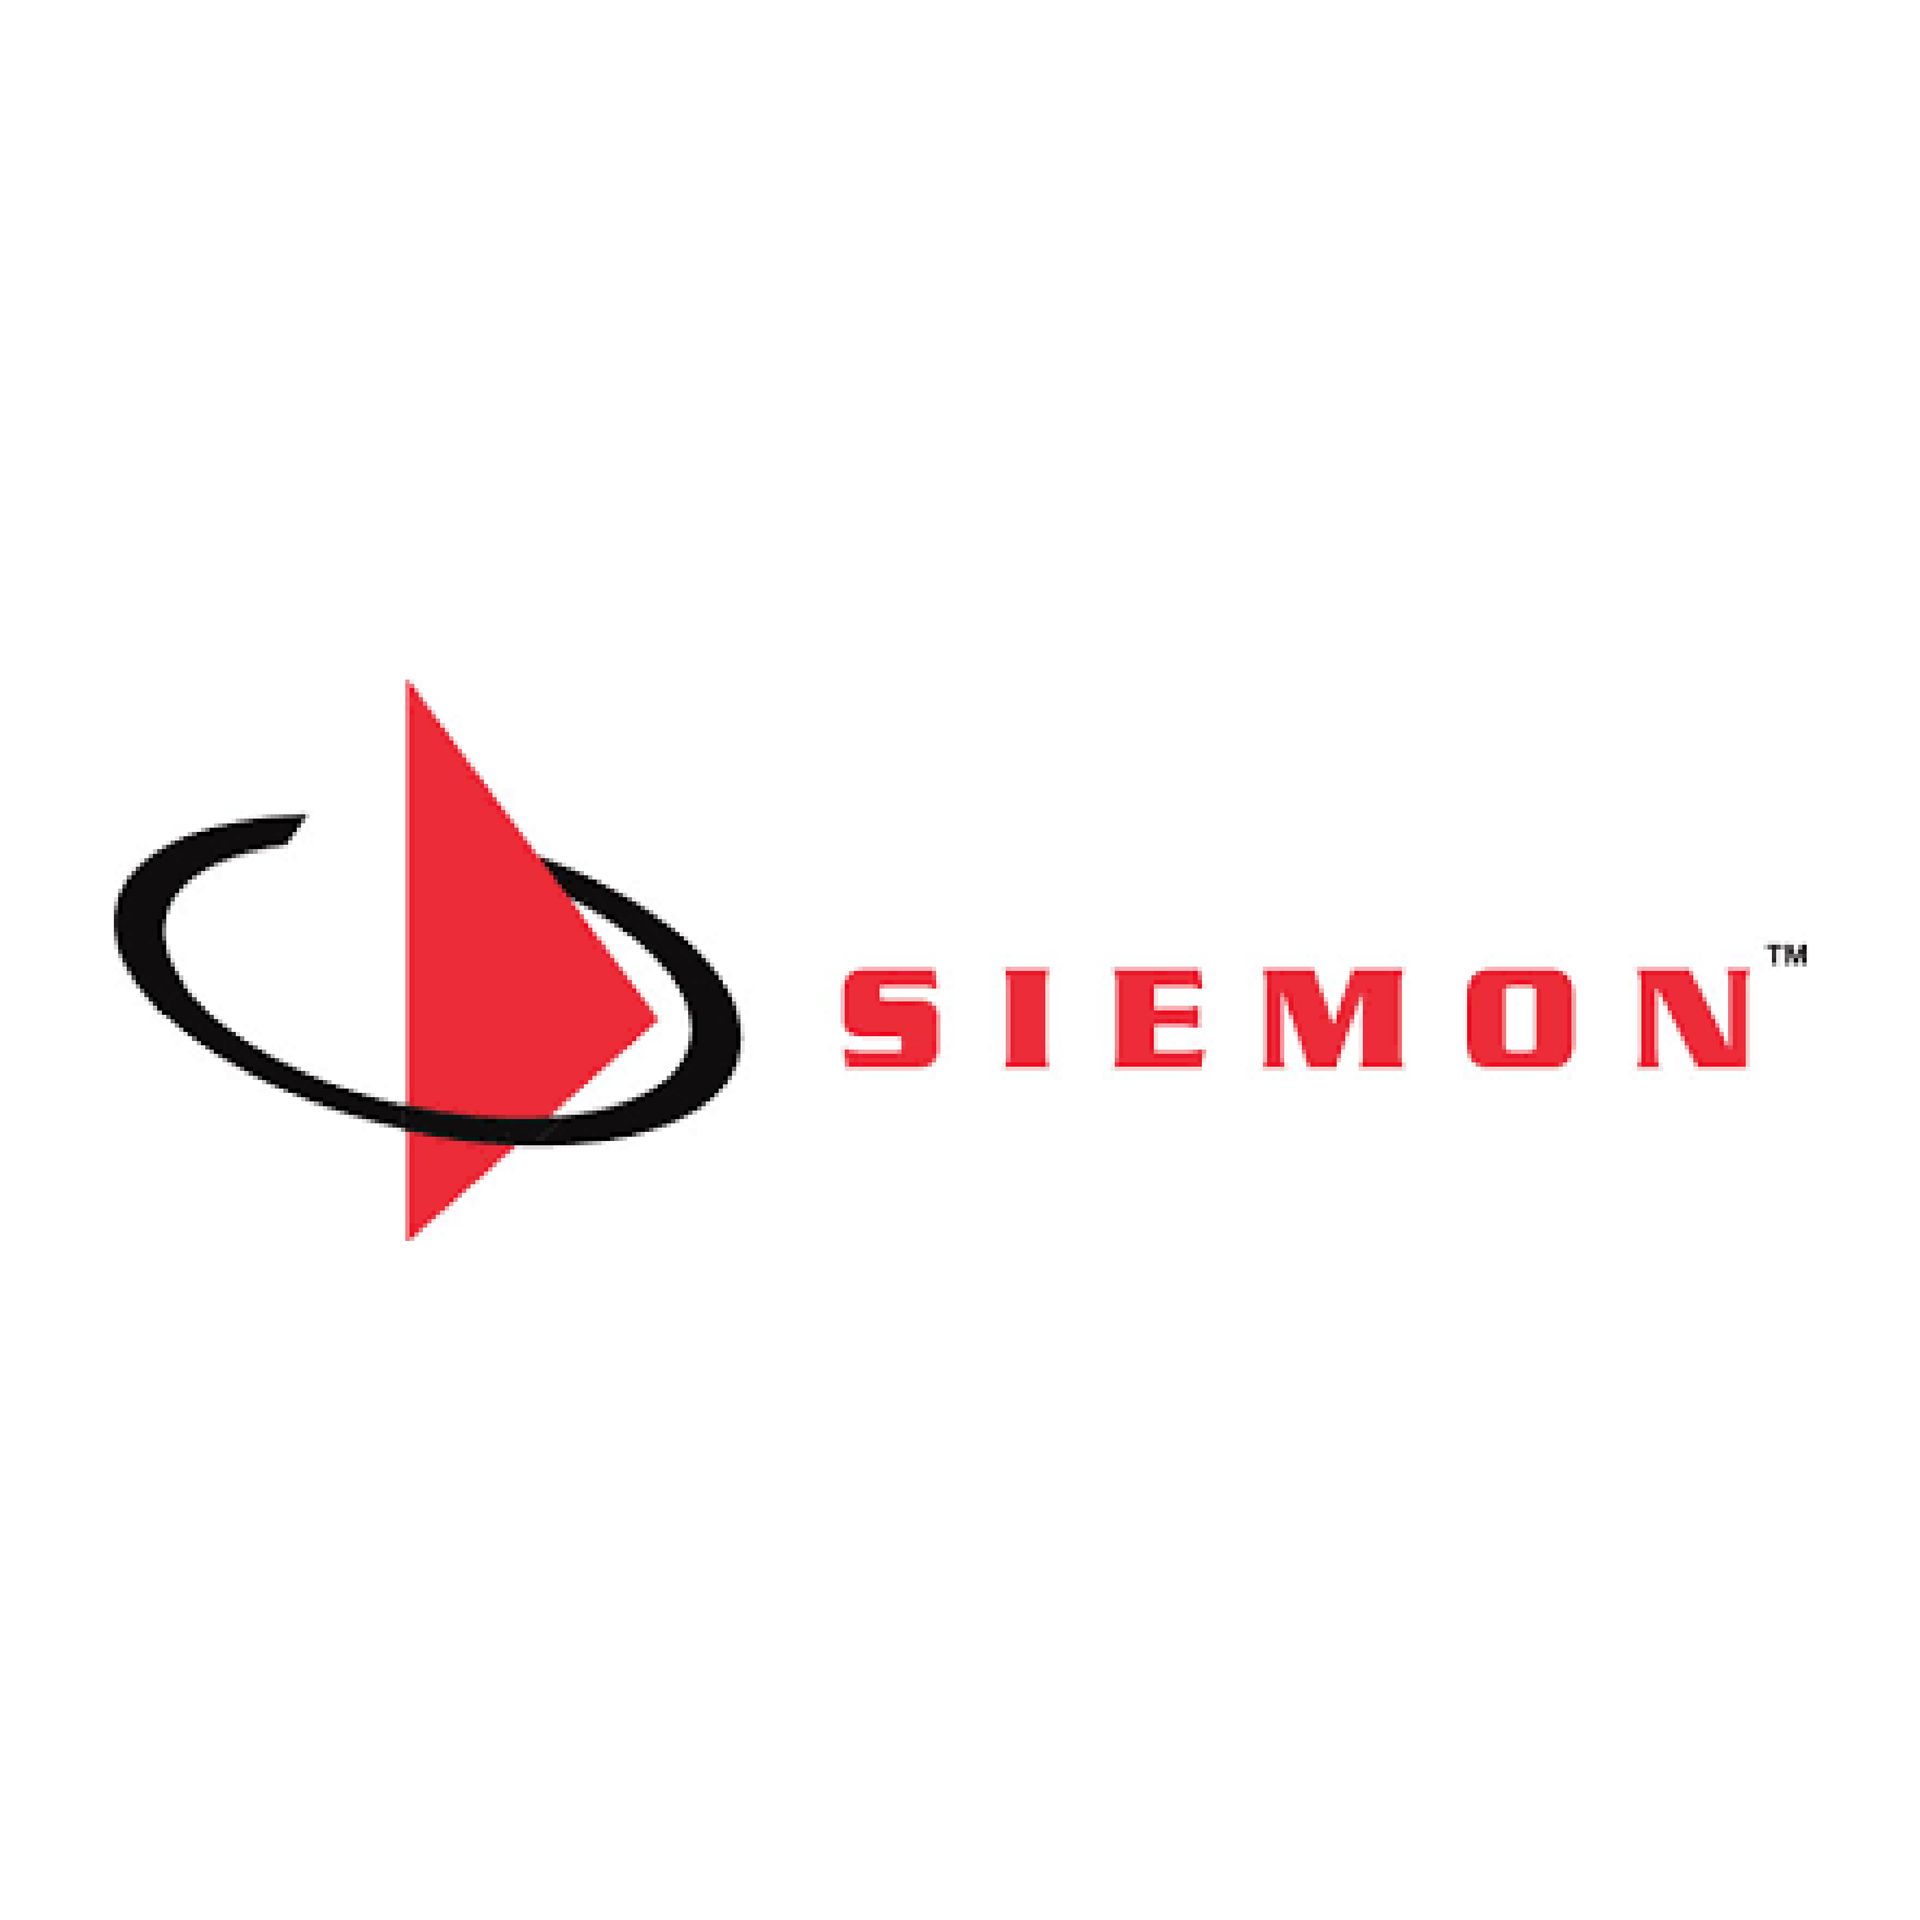 Siemon